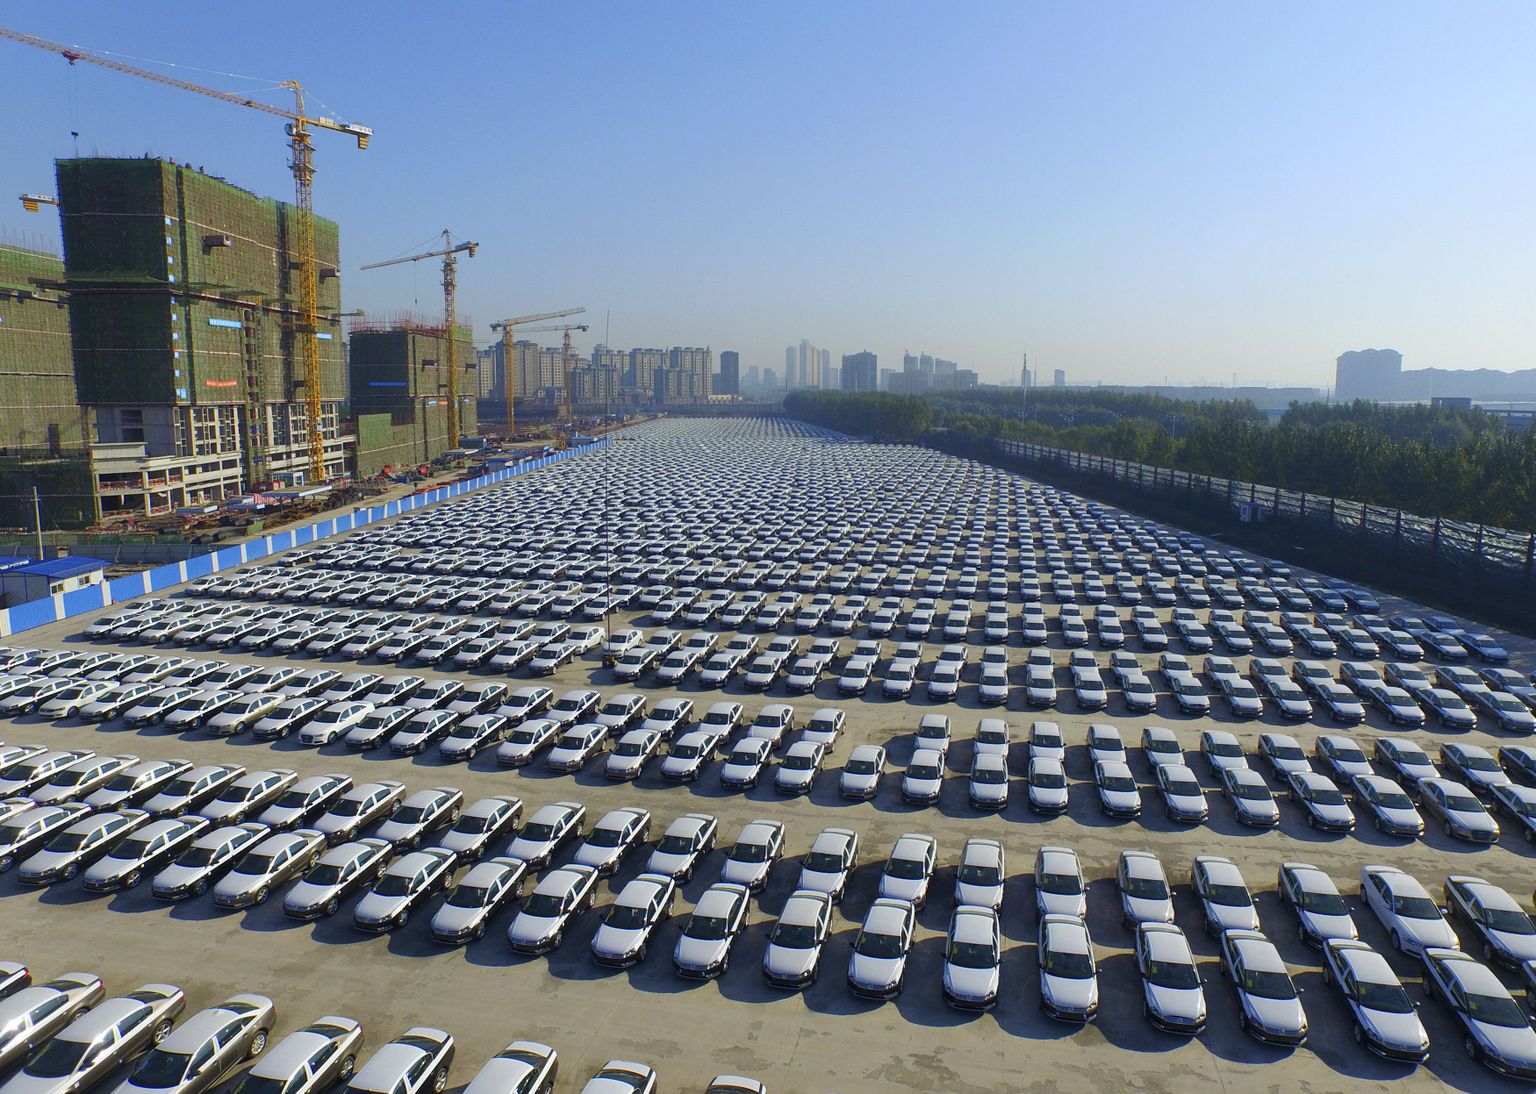 Volkswageni uued autod Changchunis, Jilin provintsis Hiinas.